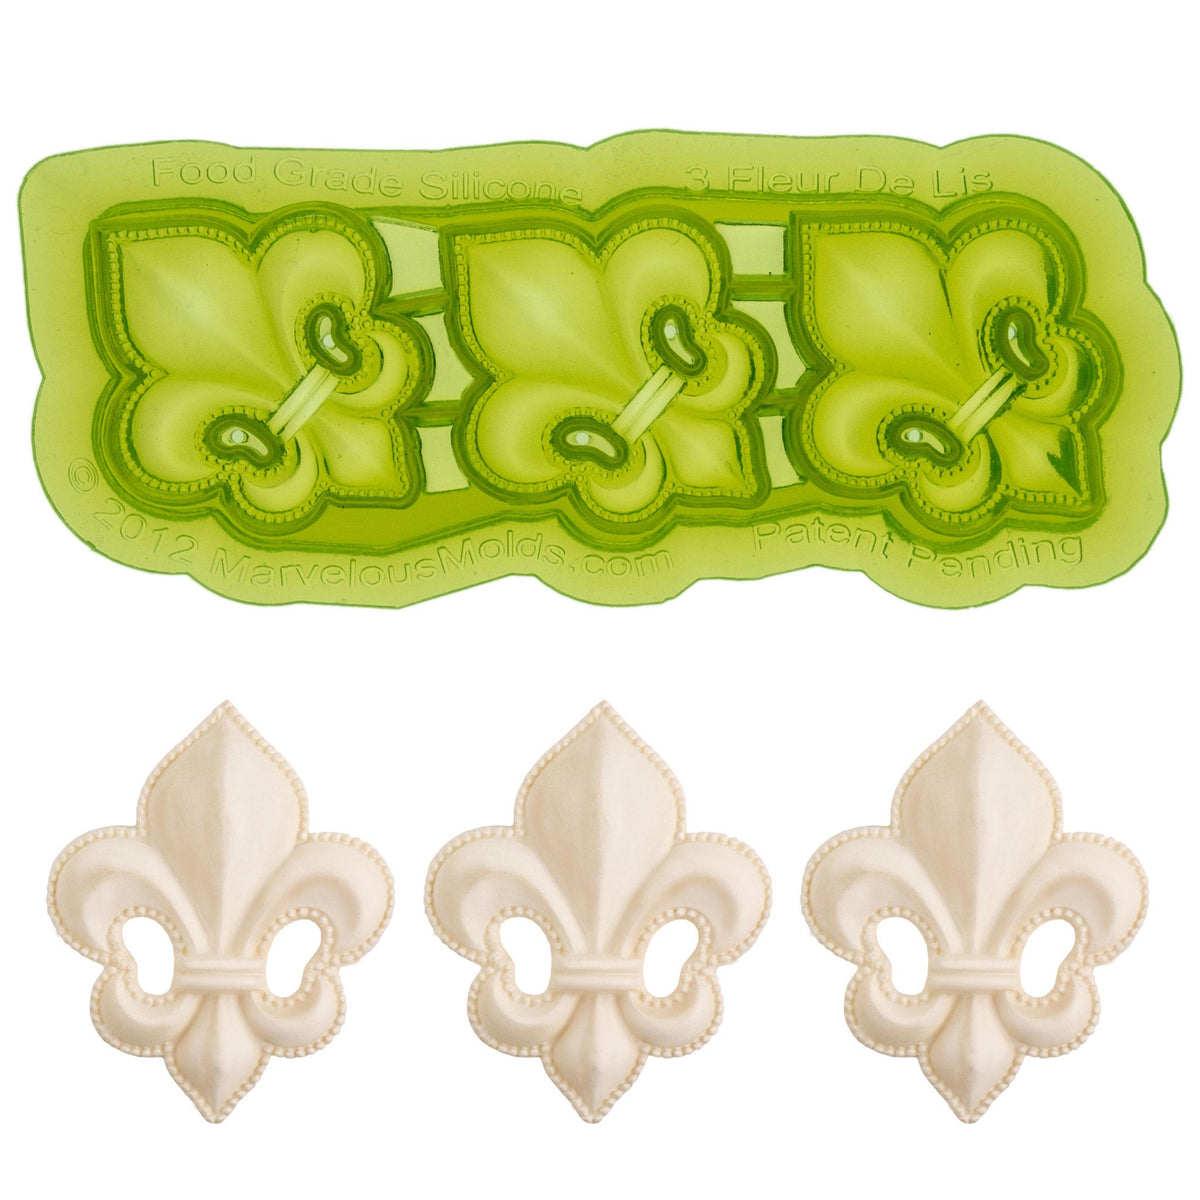 3 Fleur De Lis Food Safe Silicone Mold for Fondant Cake Decorating by Marvelous Molds